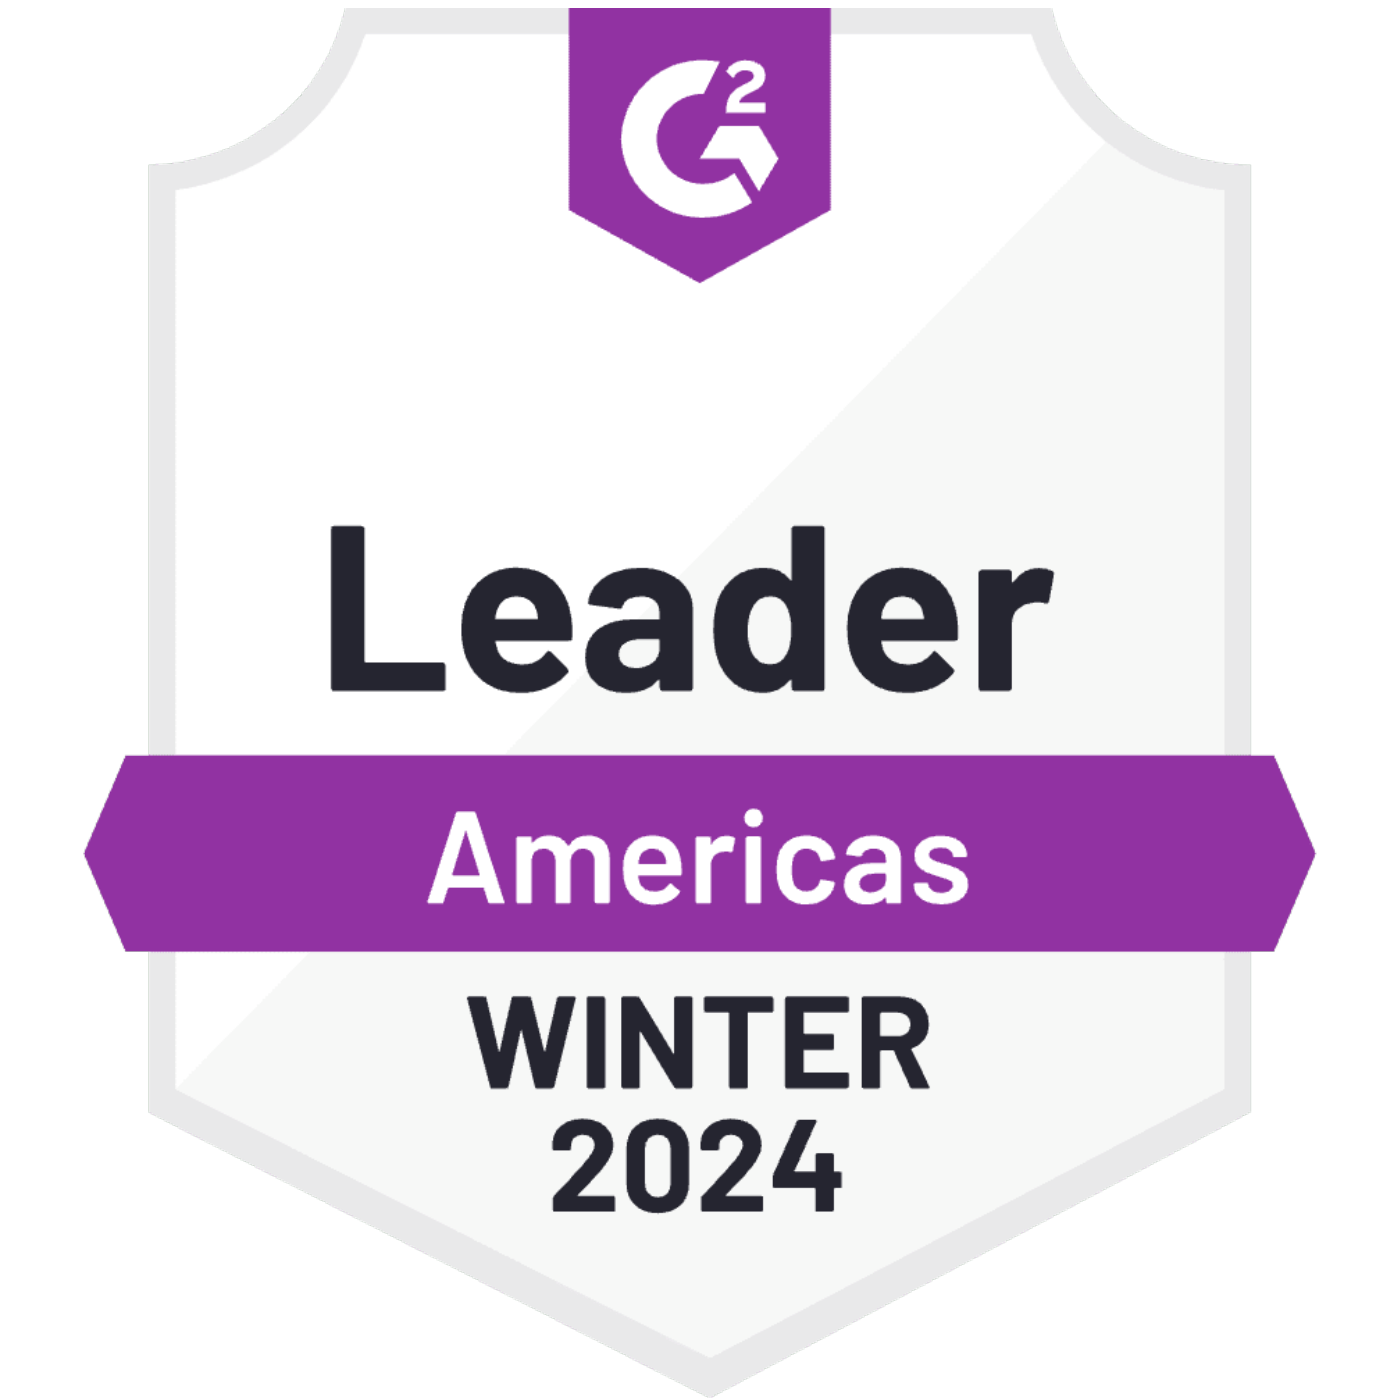 G2 Badge: Leader Americas Winter 2024